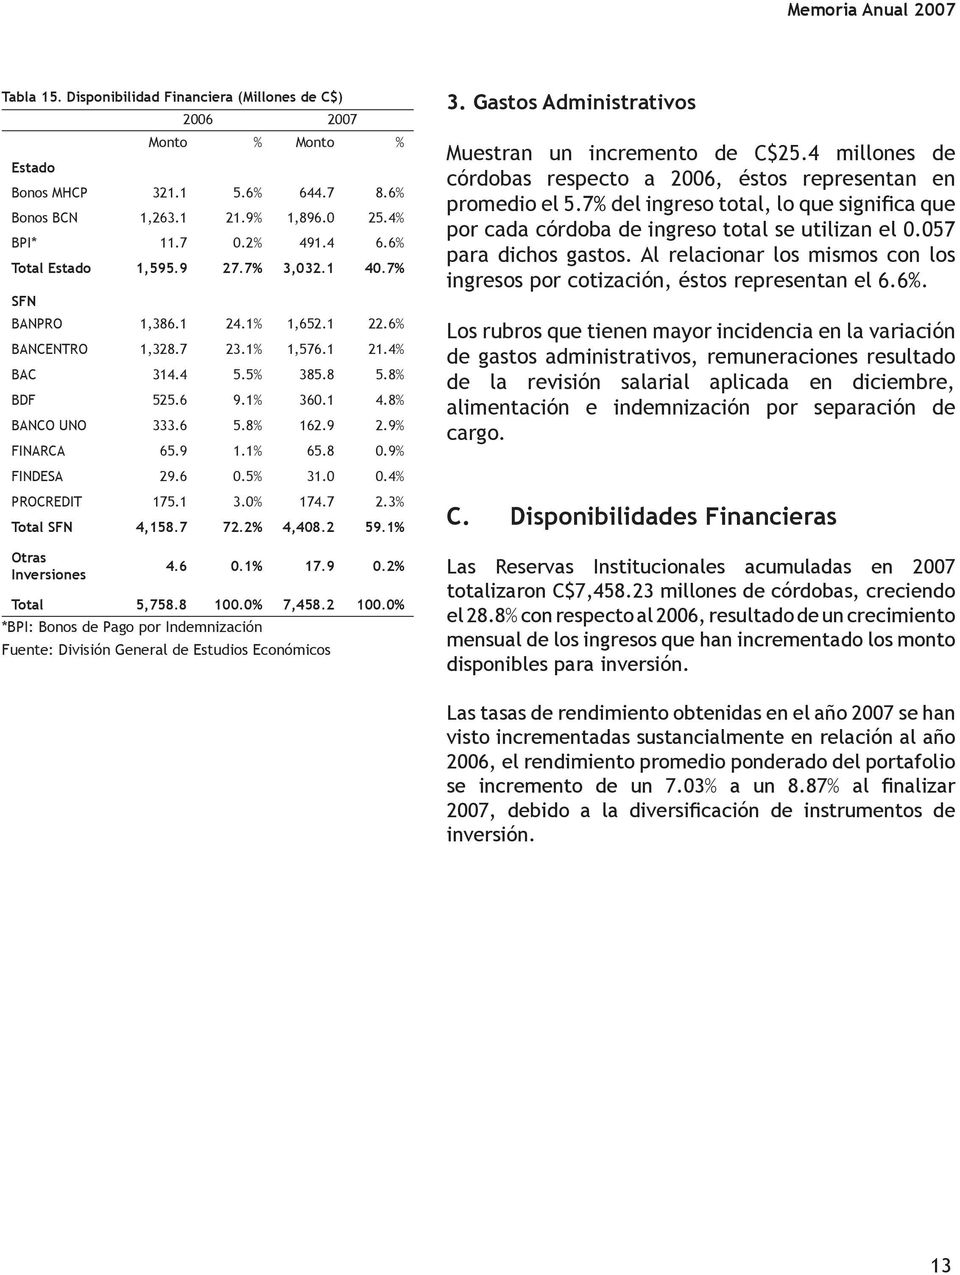 9 2.9% FINARCA 65.9 1.1% 65.8 0.9% FINDESA 29.6 0.5% 31.0 0.4% PROCREDIT 175.1 3.0% 174.7 2.3% Total SFN 4,158.7 72.2% 4,408.2 59.1% Otras Inversiones 4.6 0.1% 17.9 0.2% Total 5,758.8 100.0% 7,458.